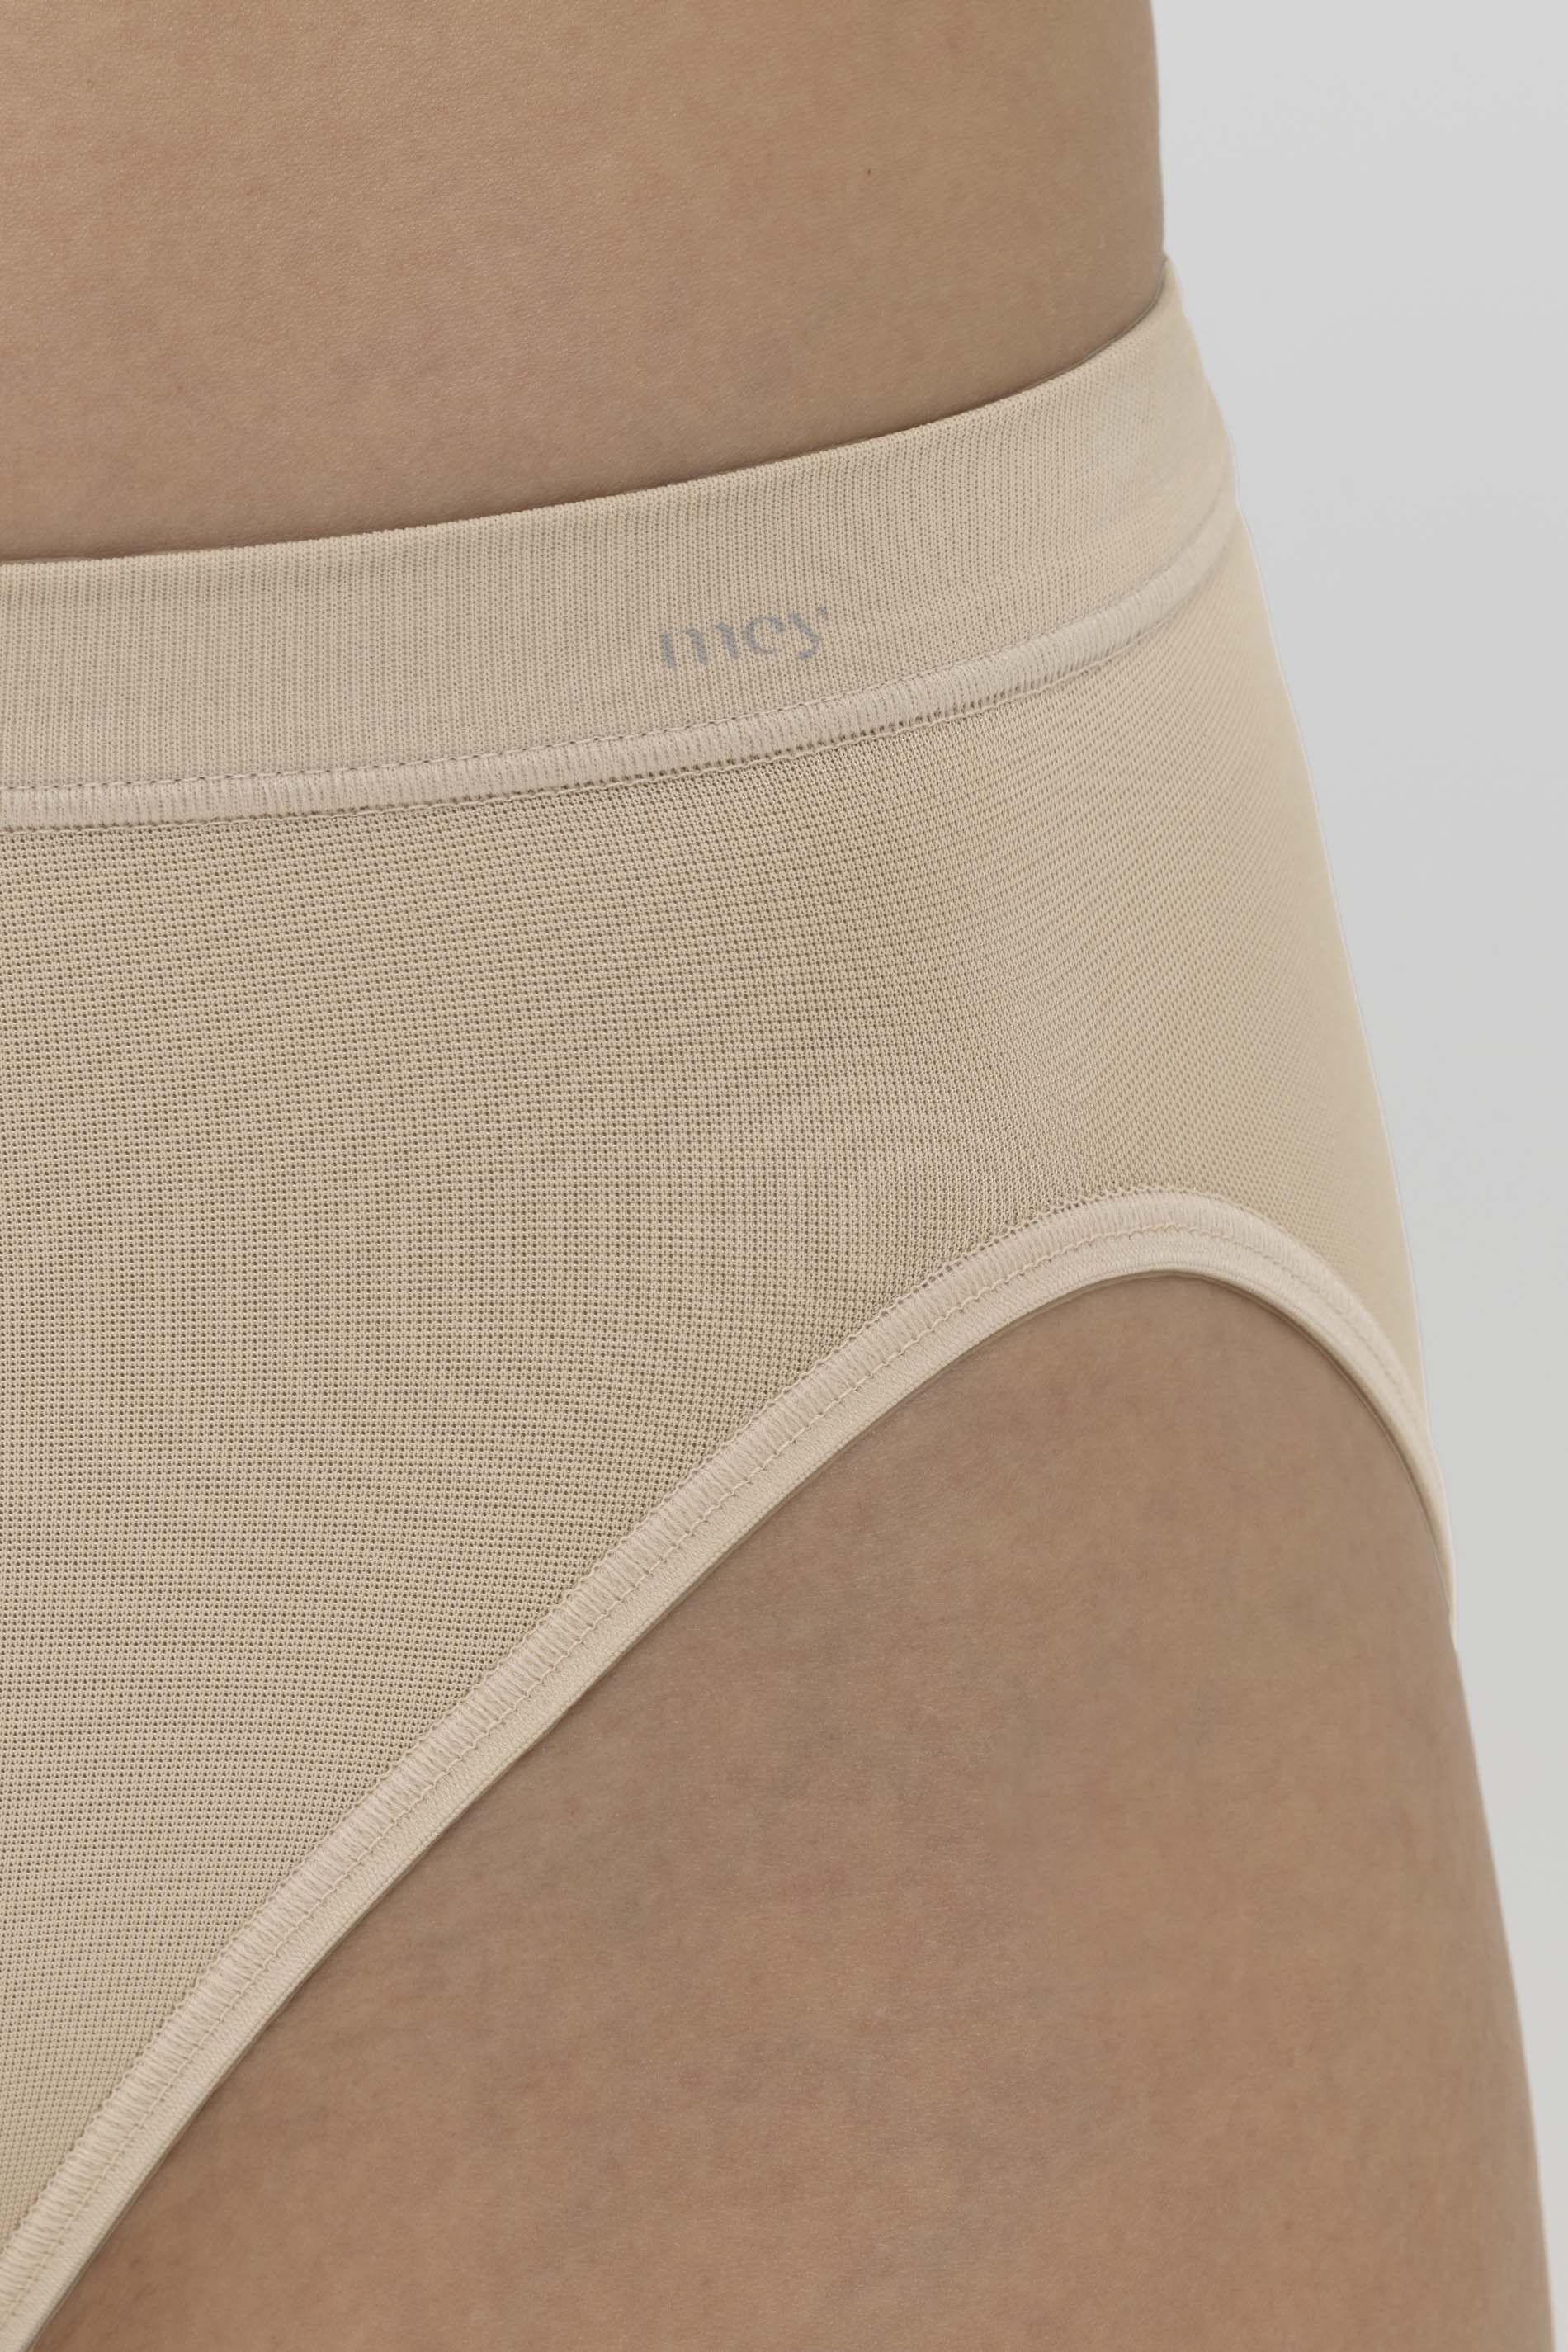 Jazz-Pants Cream Tan Serie Emotion Detailansicht 01 | mey®